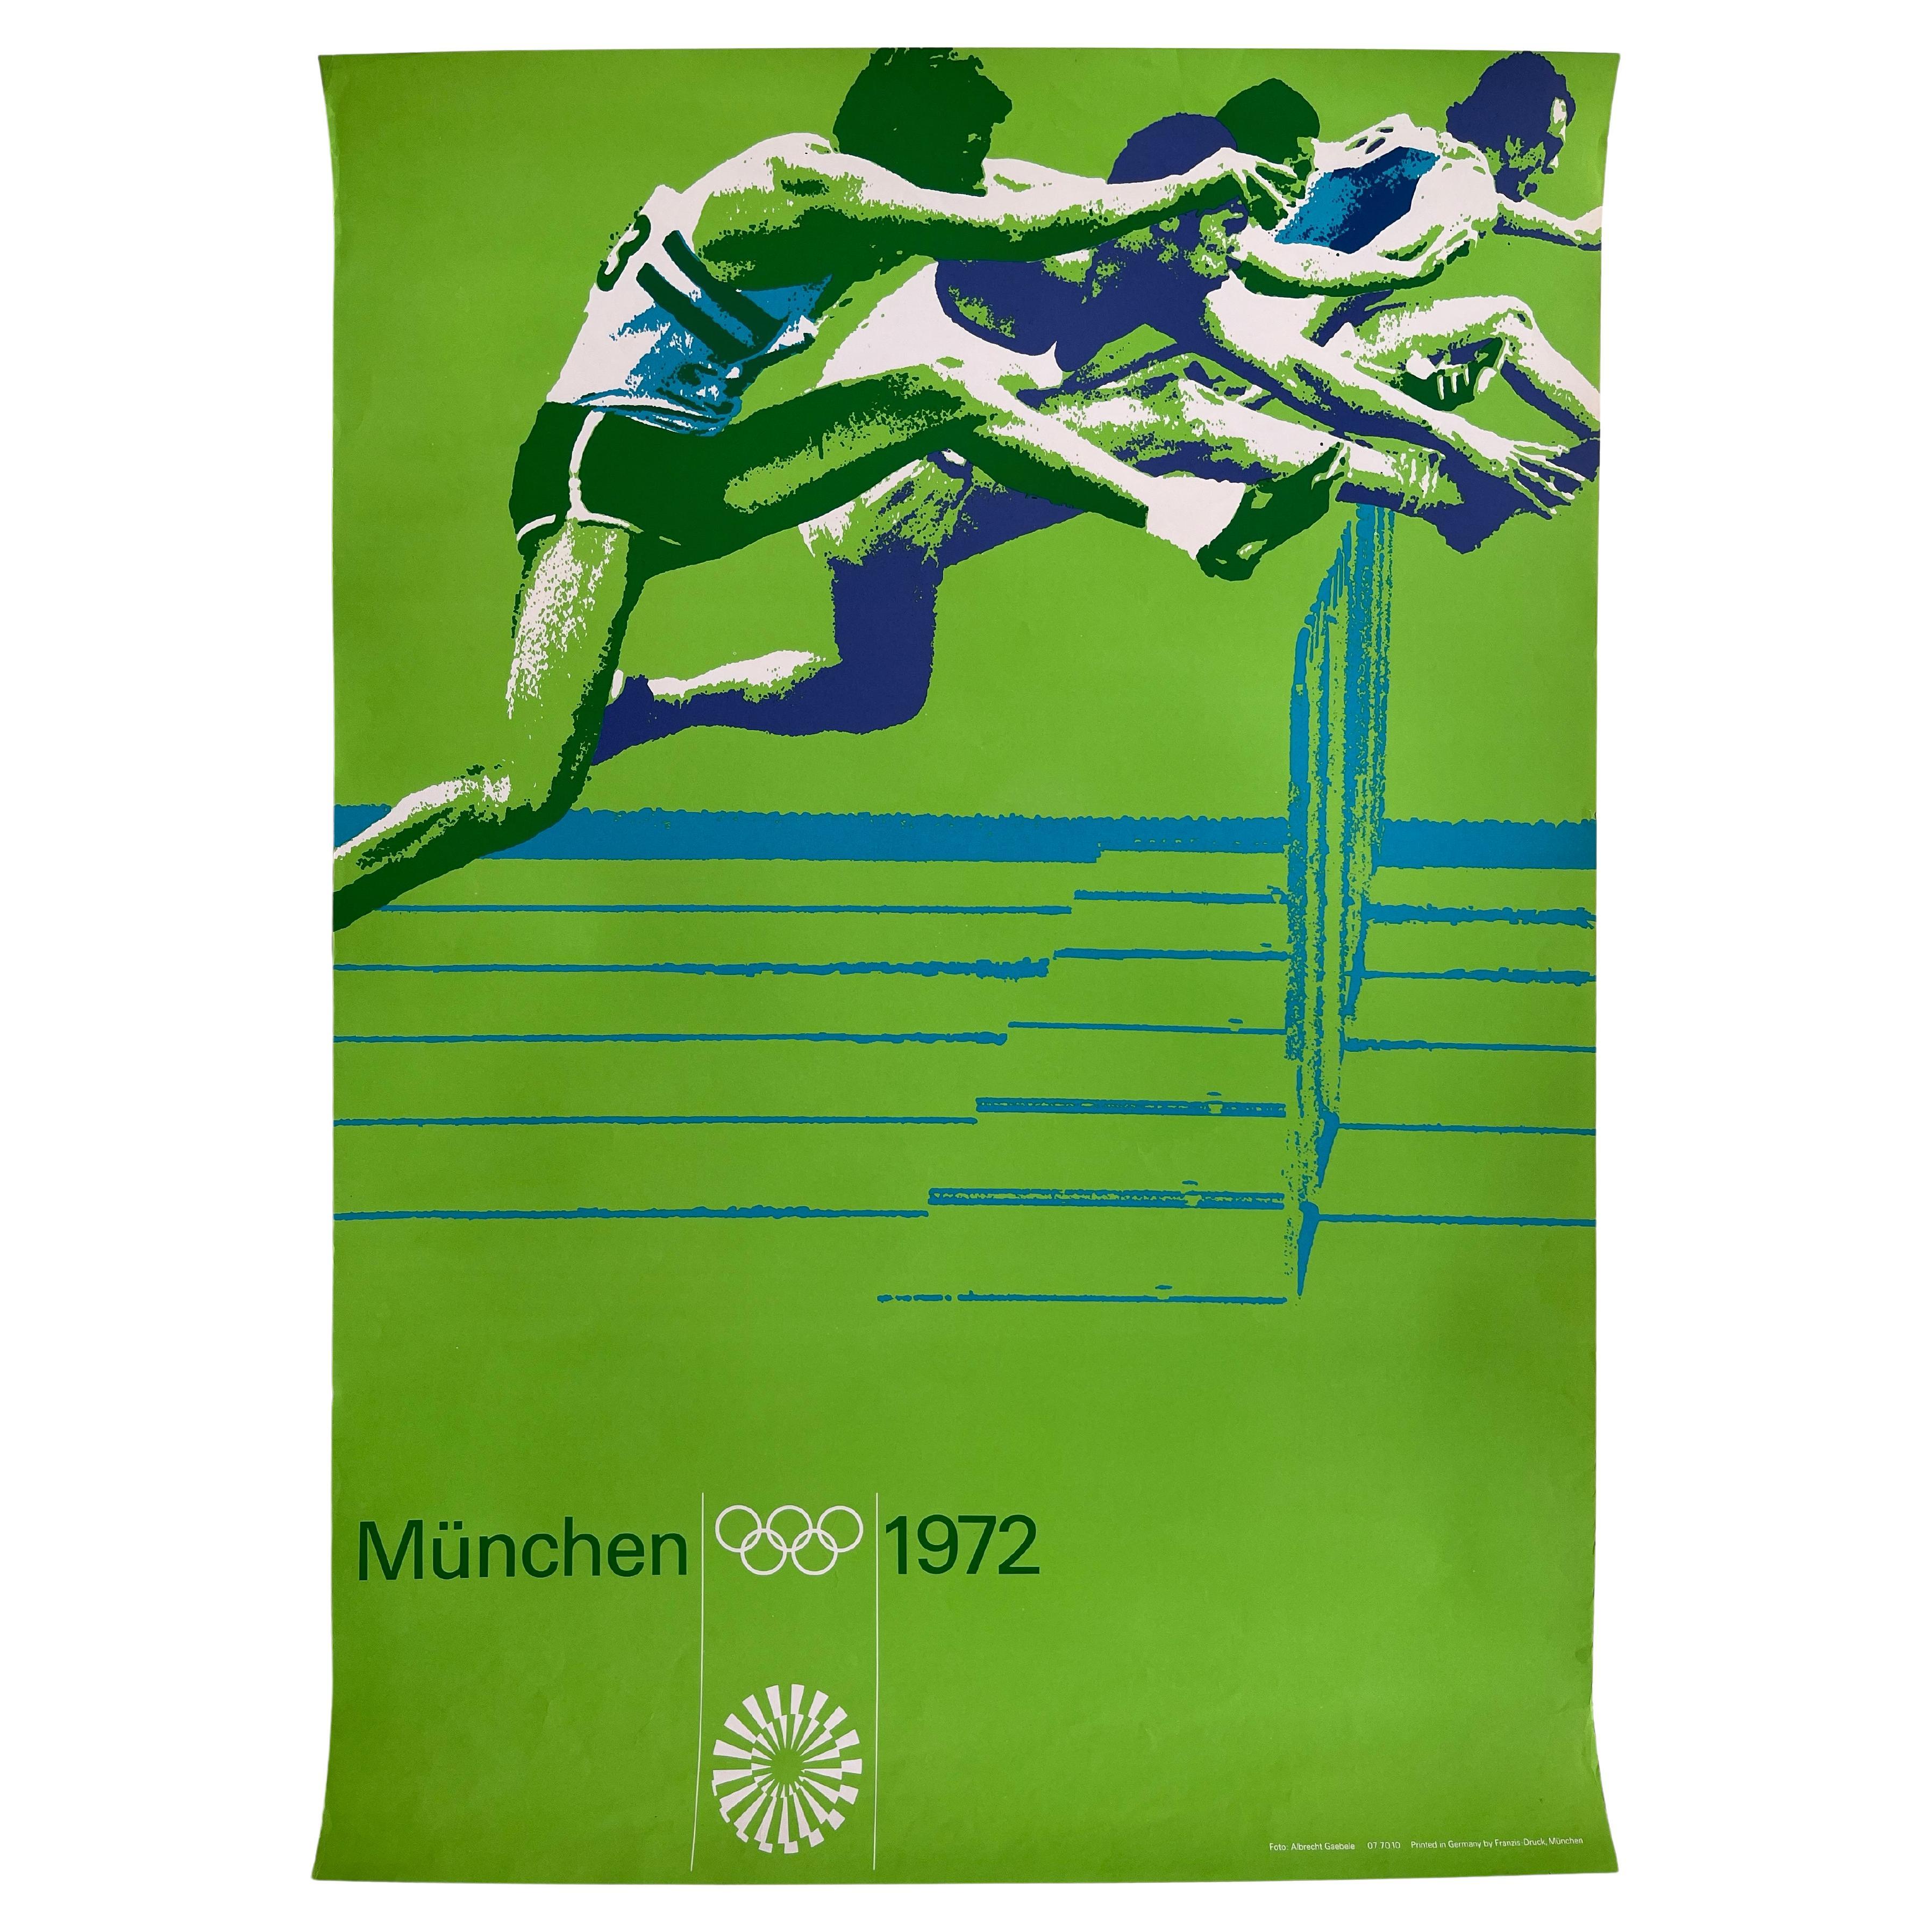 Otl Aicher Olympic Games Munich 1972, Running over Obstacles, Original Poster